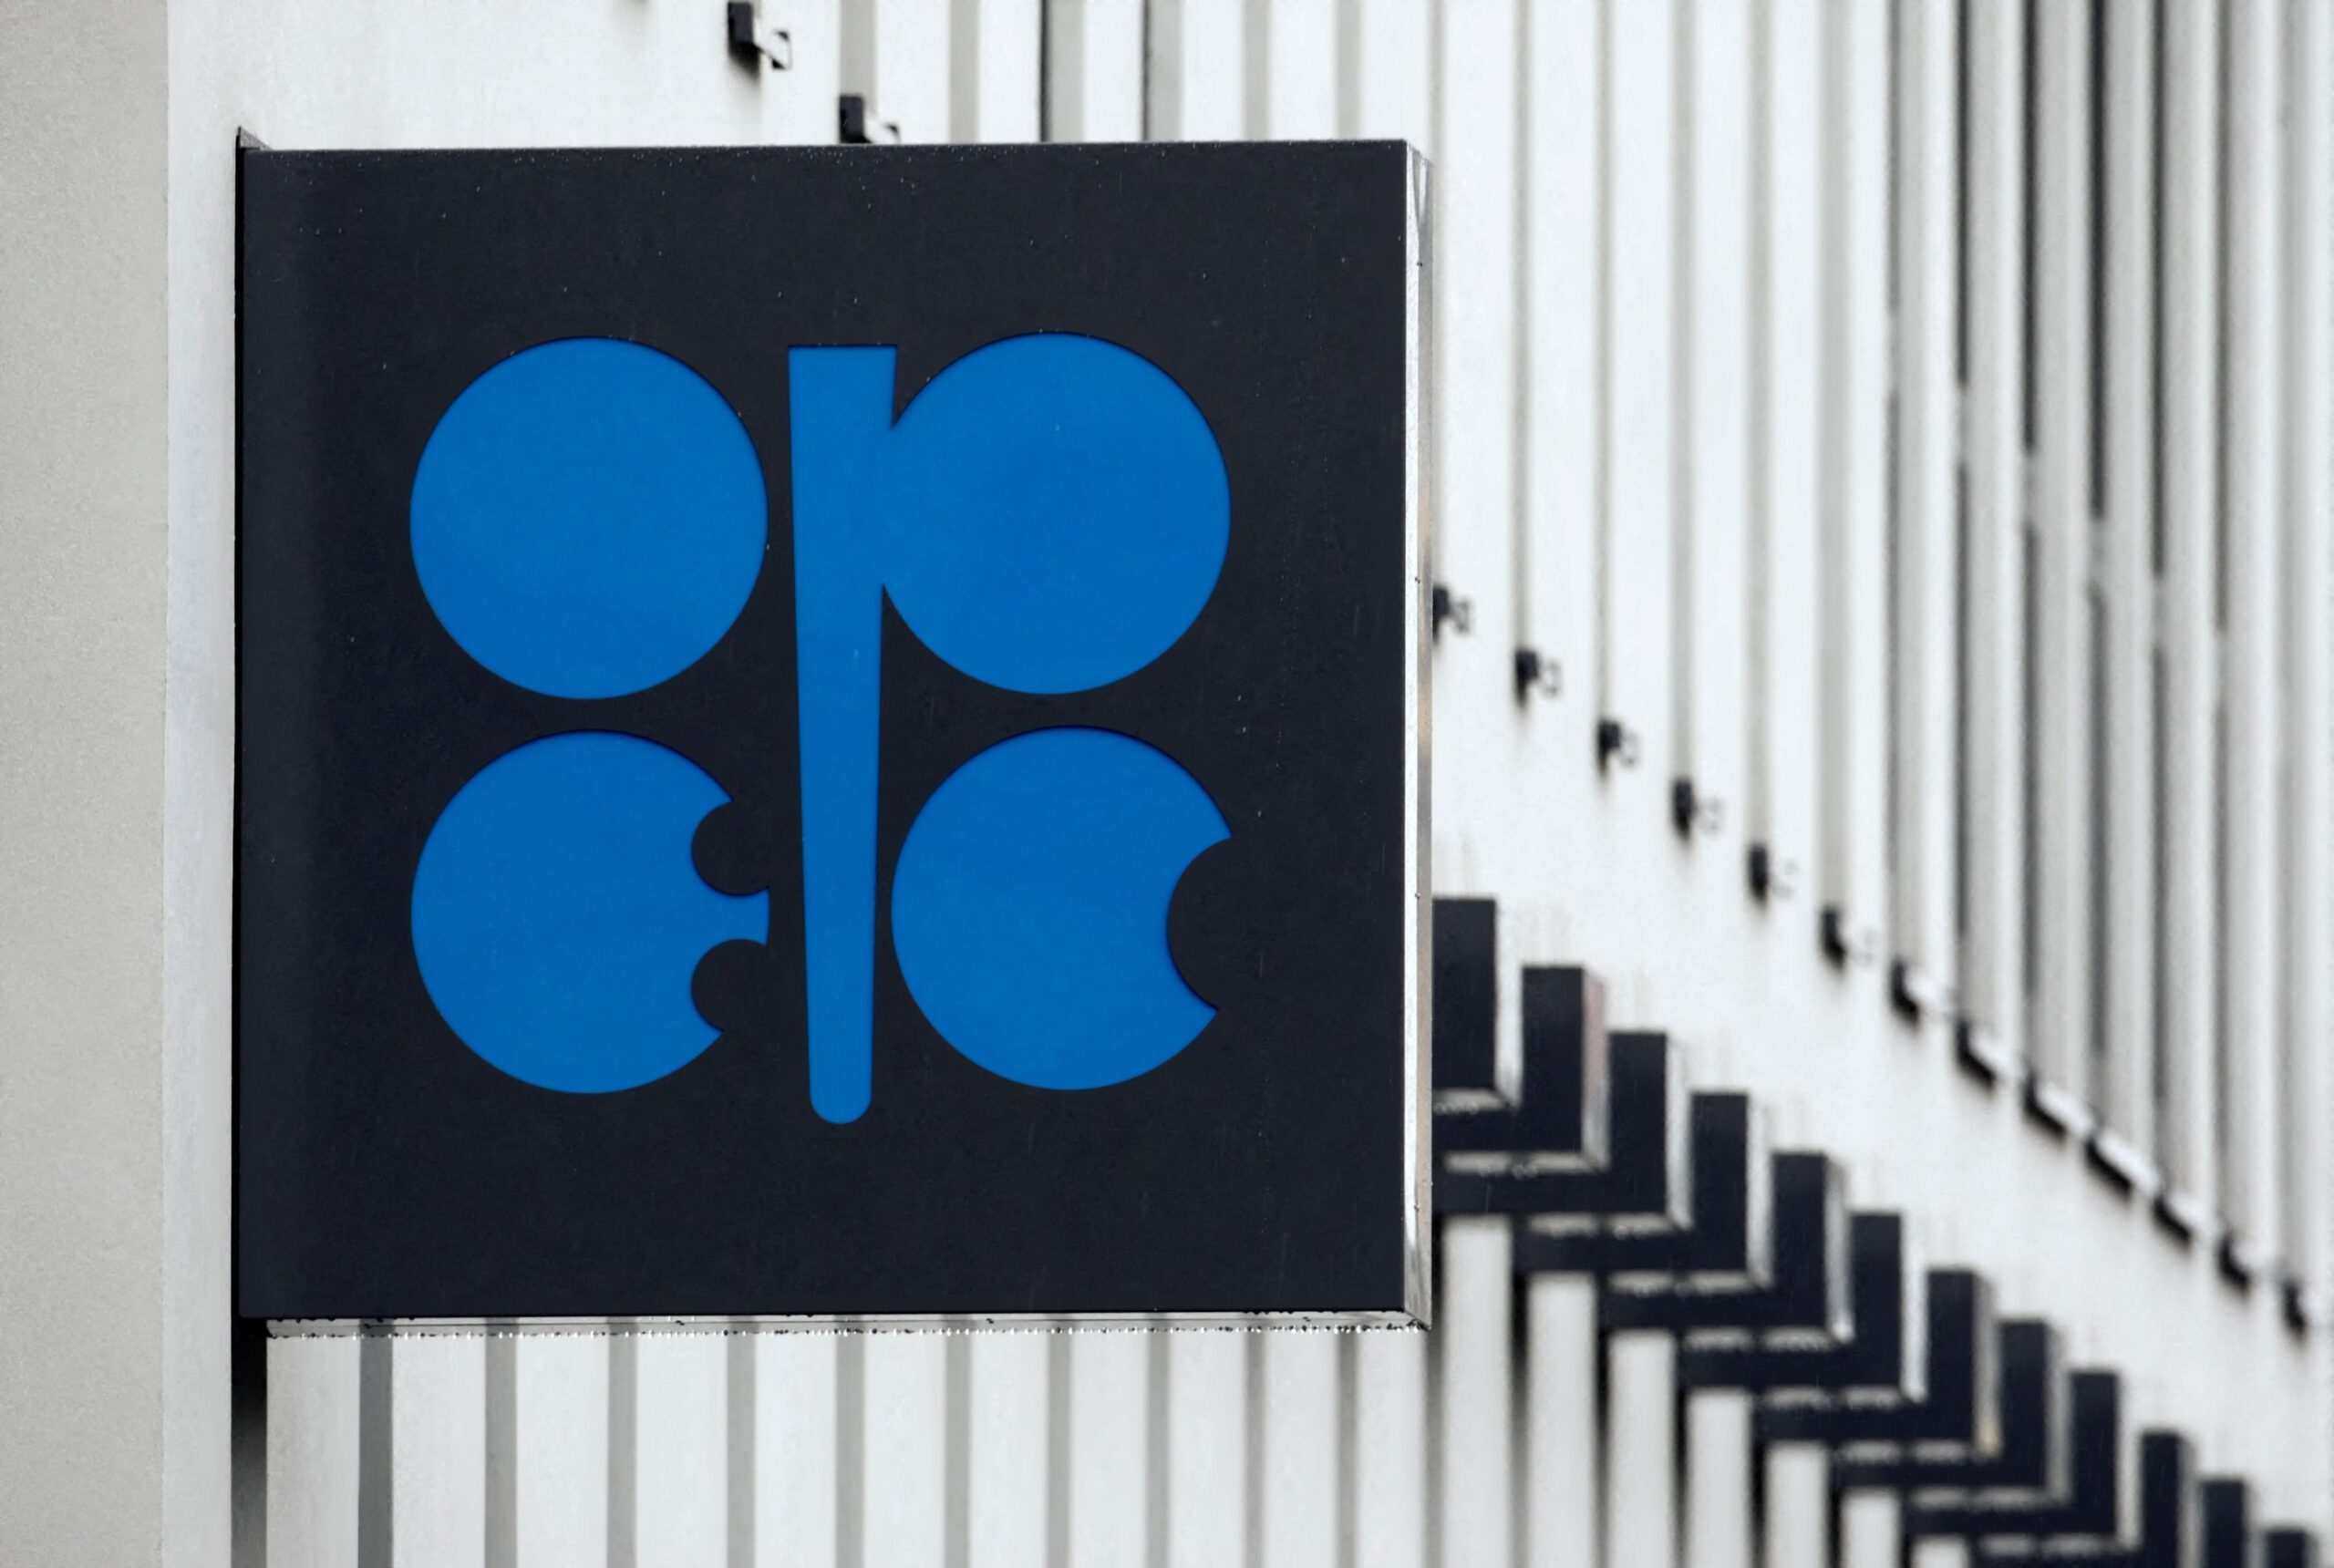 OPEC+ sticks to planned output rises despite oil price rally